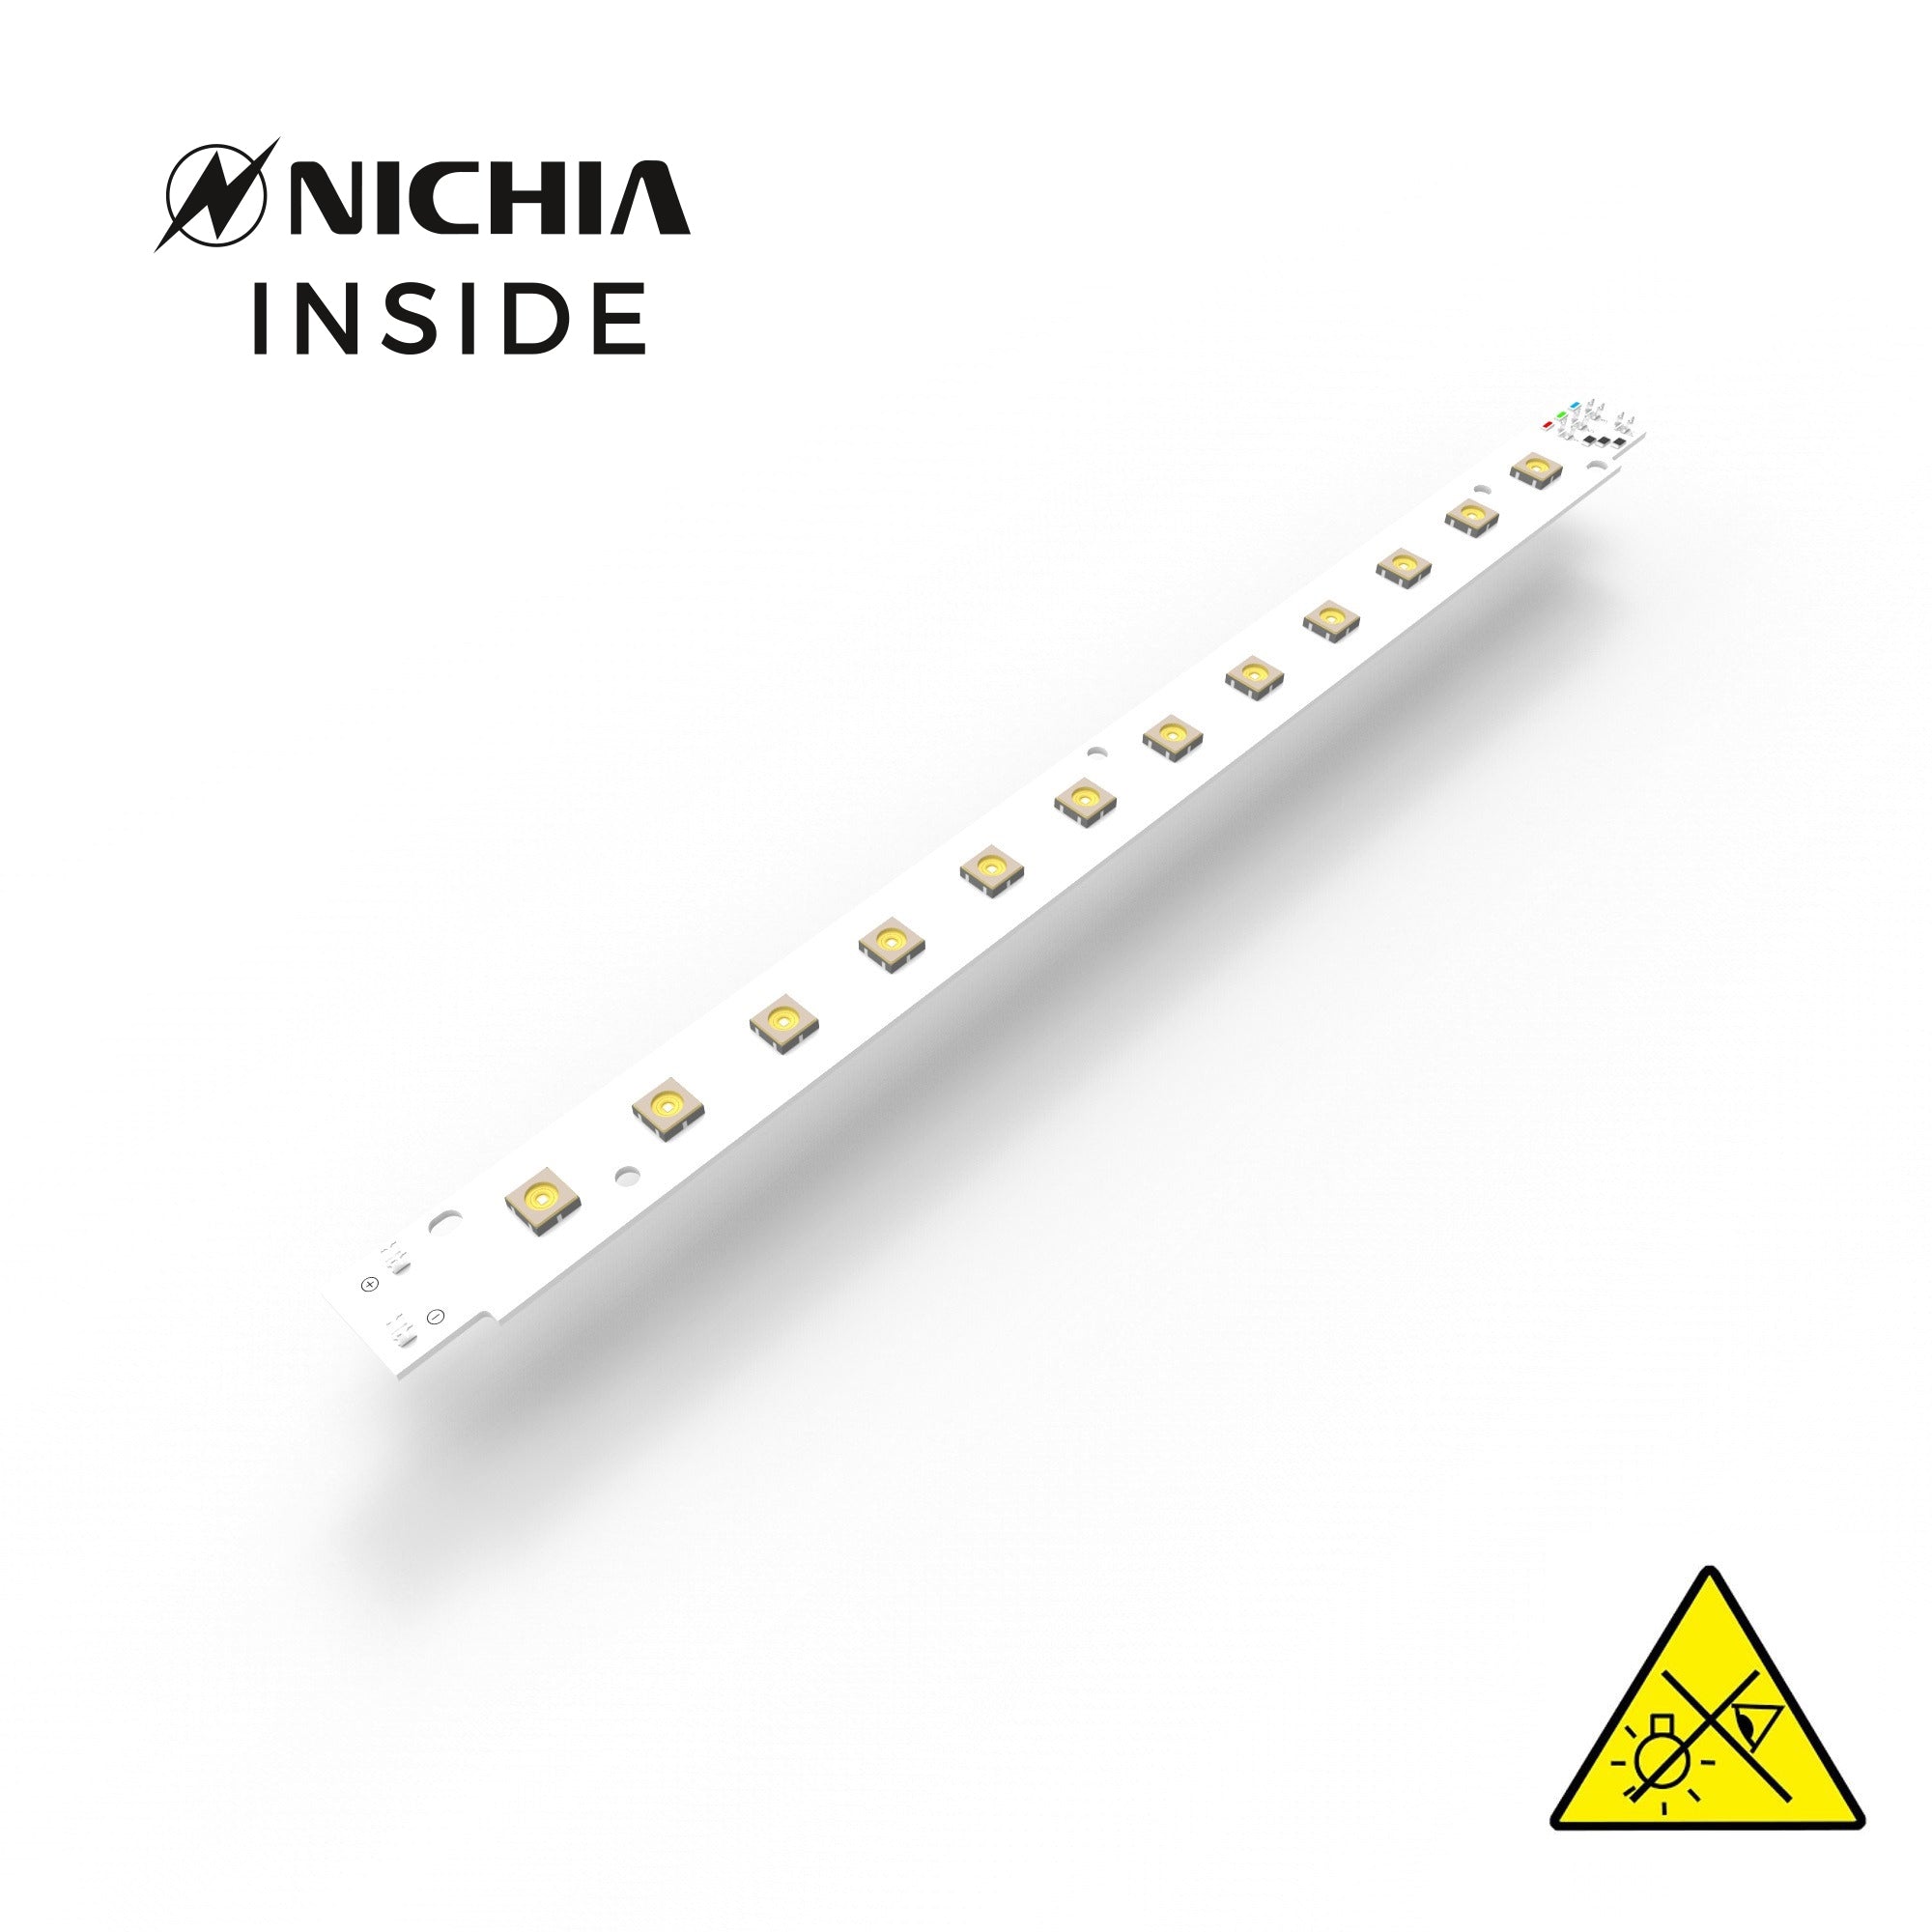 12V LED Streifen für Desinfektion UV-C - LED Lampen, Leuchtmittel